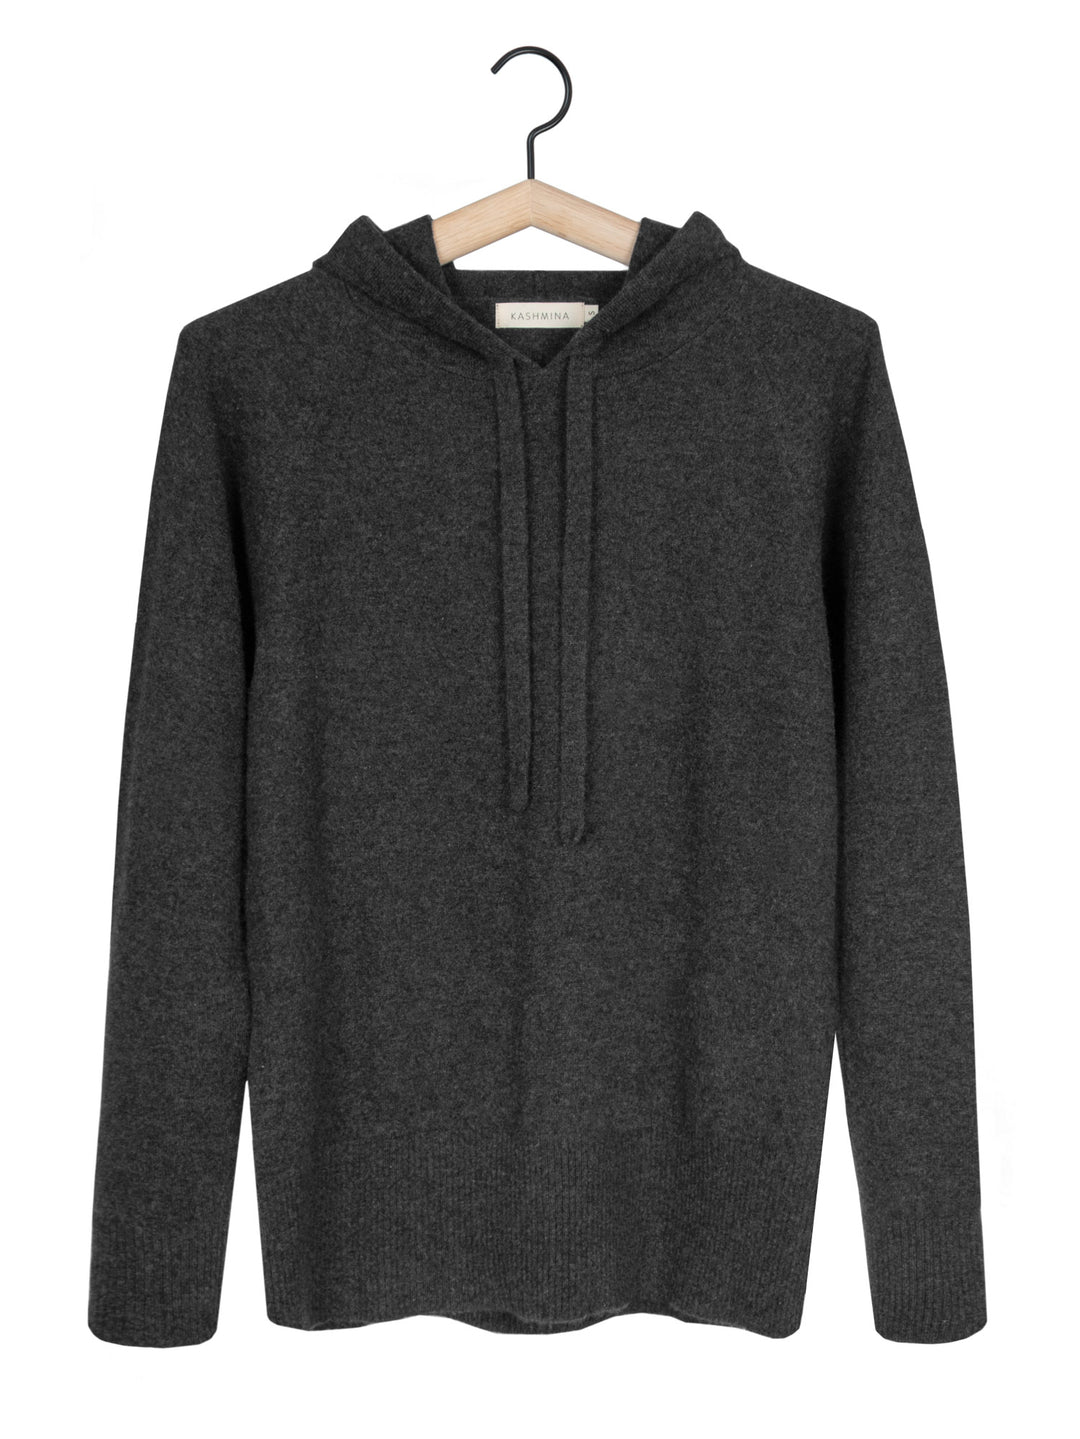 KASHMINA cashmere hoodie 100% cashmere